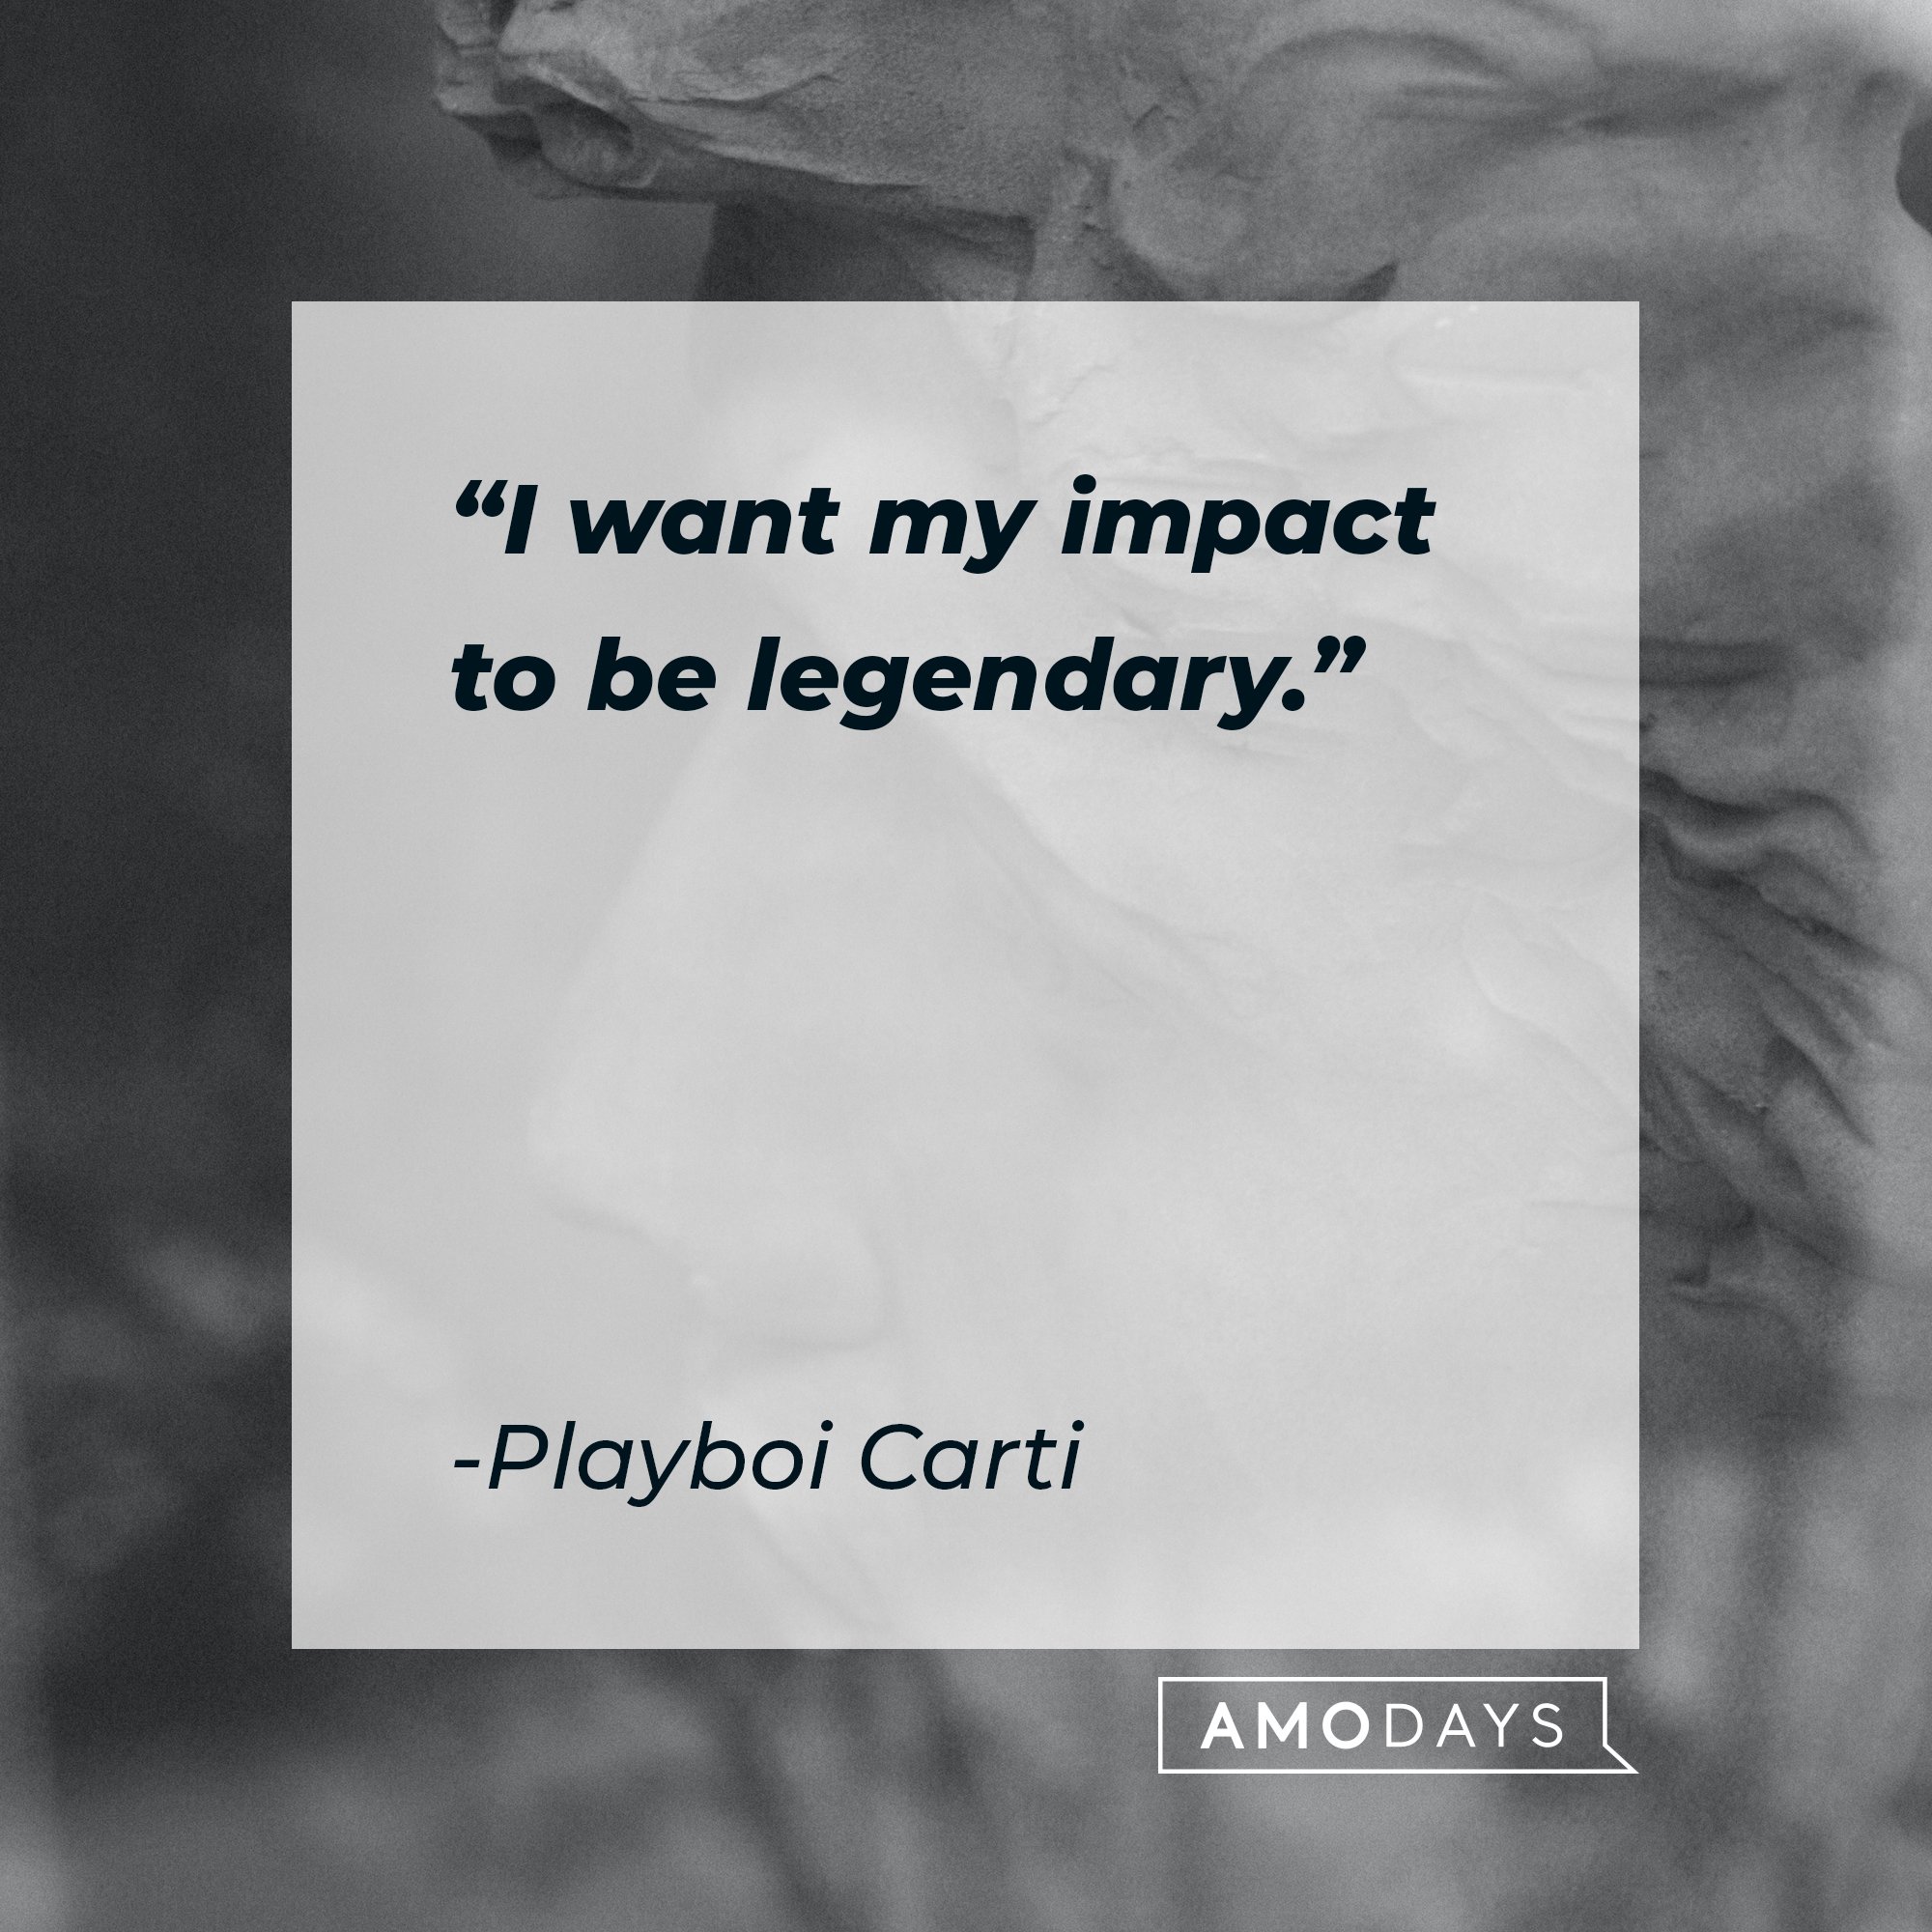  Playboi Carti ‘s quote: "I want my impact to be legendary." | Image: AmoDays